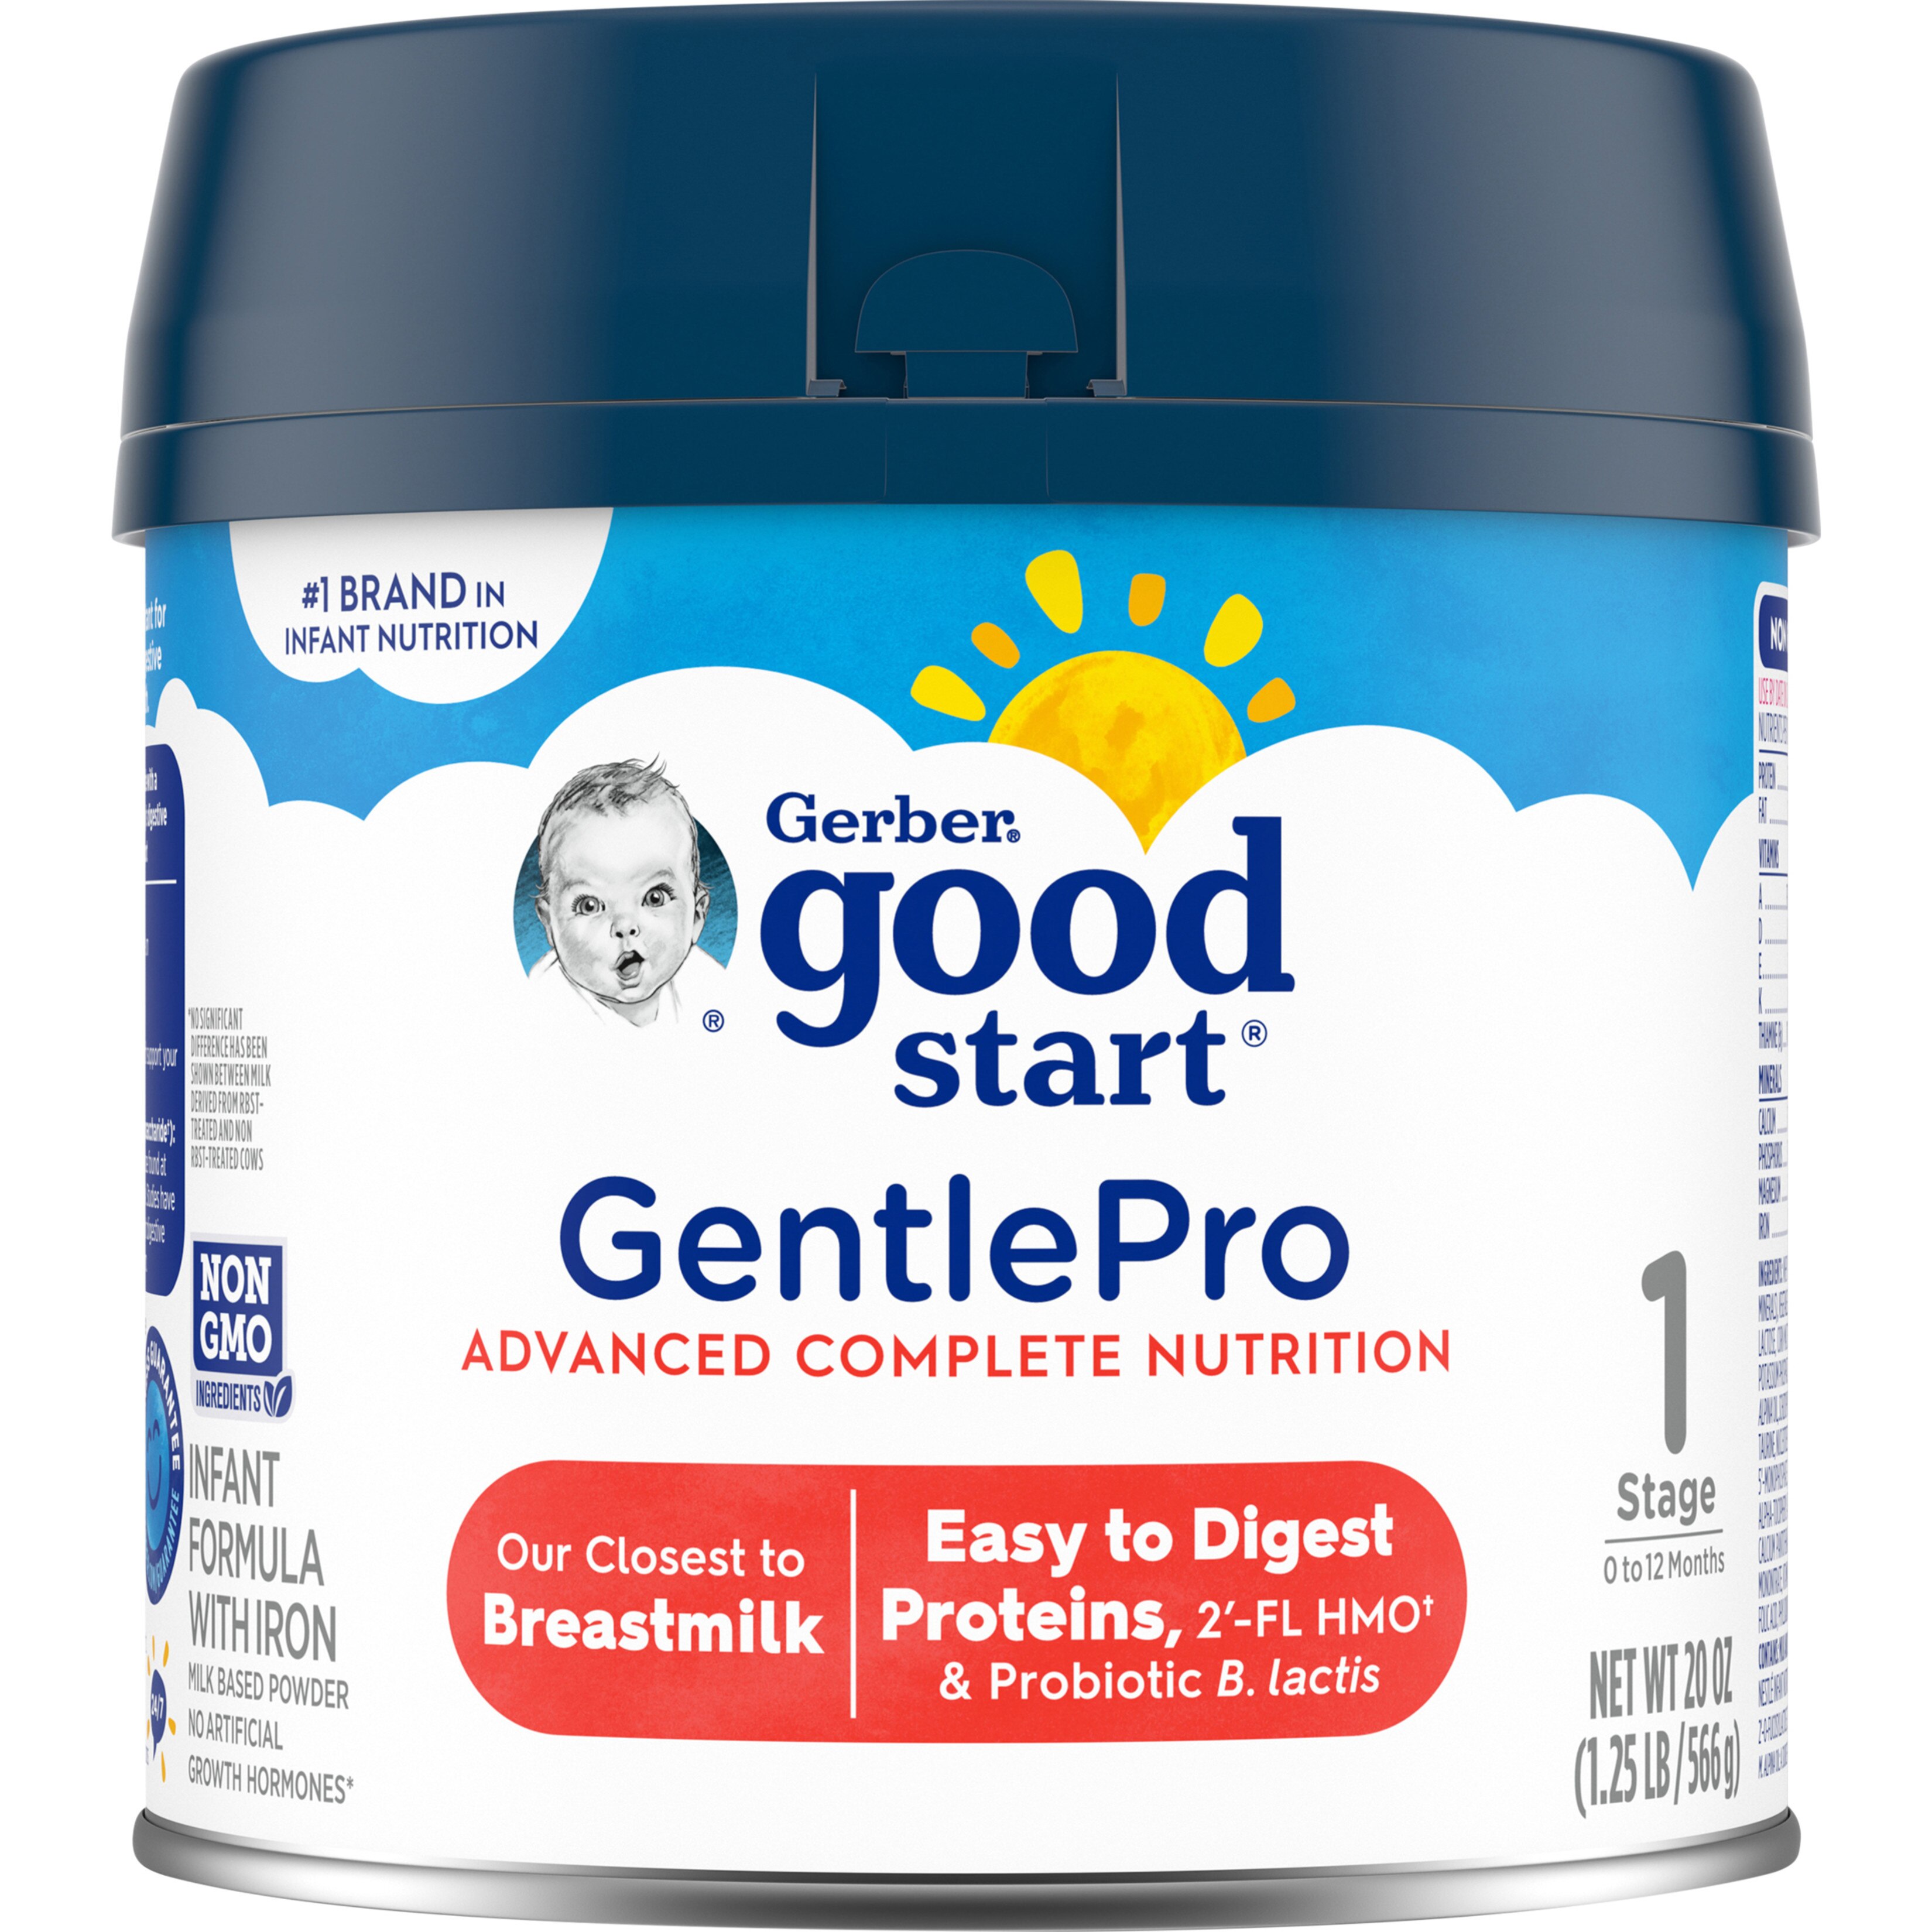 Gerber Good Start, Baby Formula Powder, GentlePro, Stage 1, 20 OZ